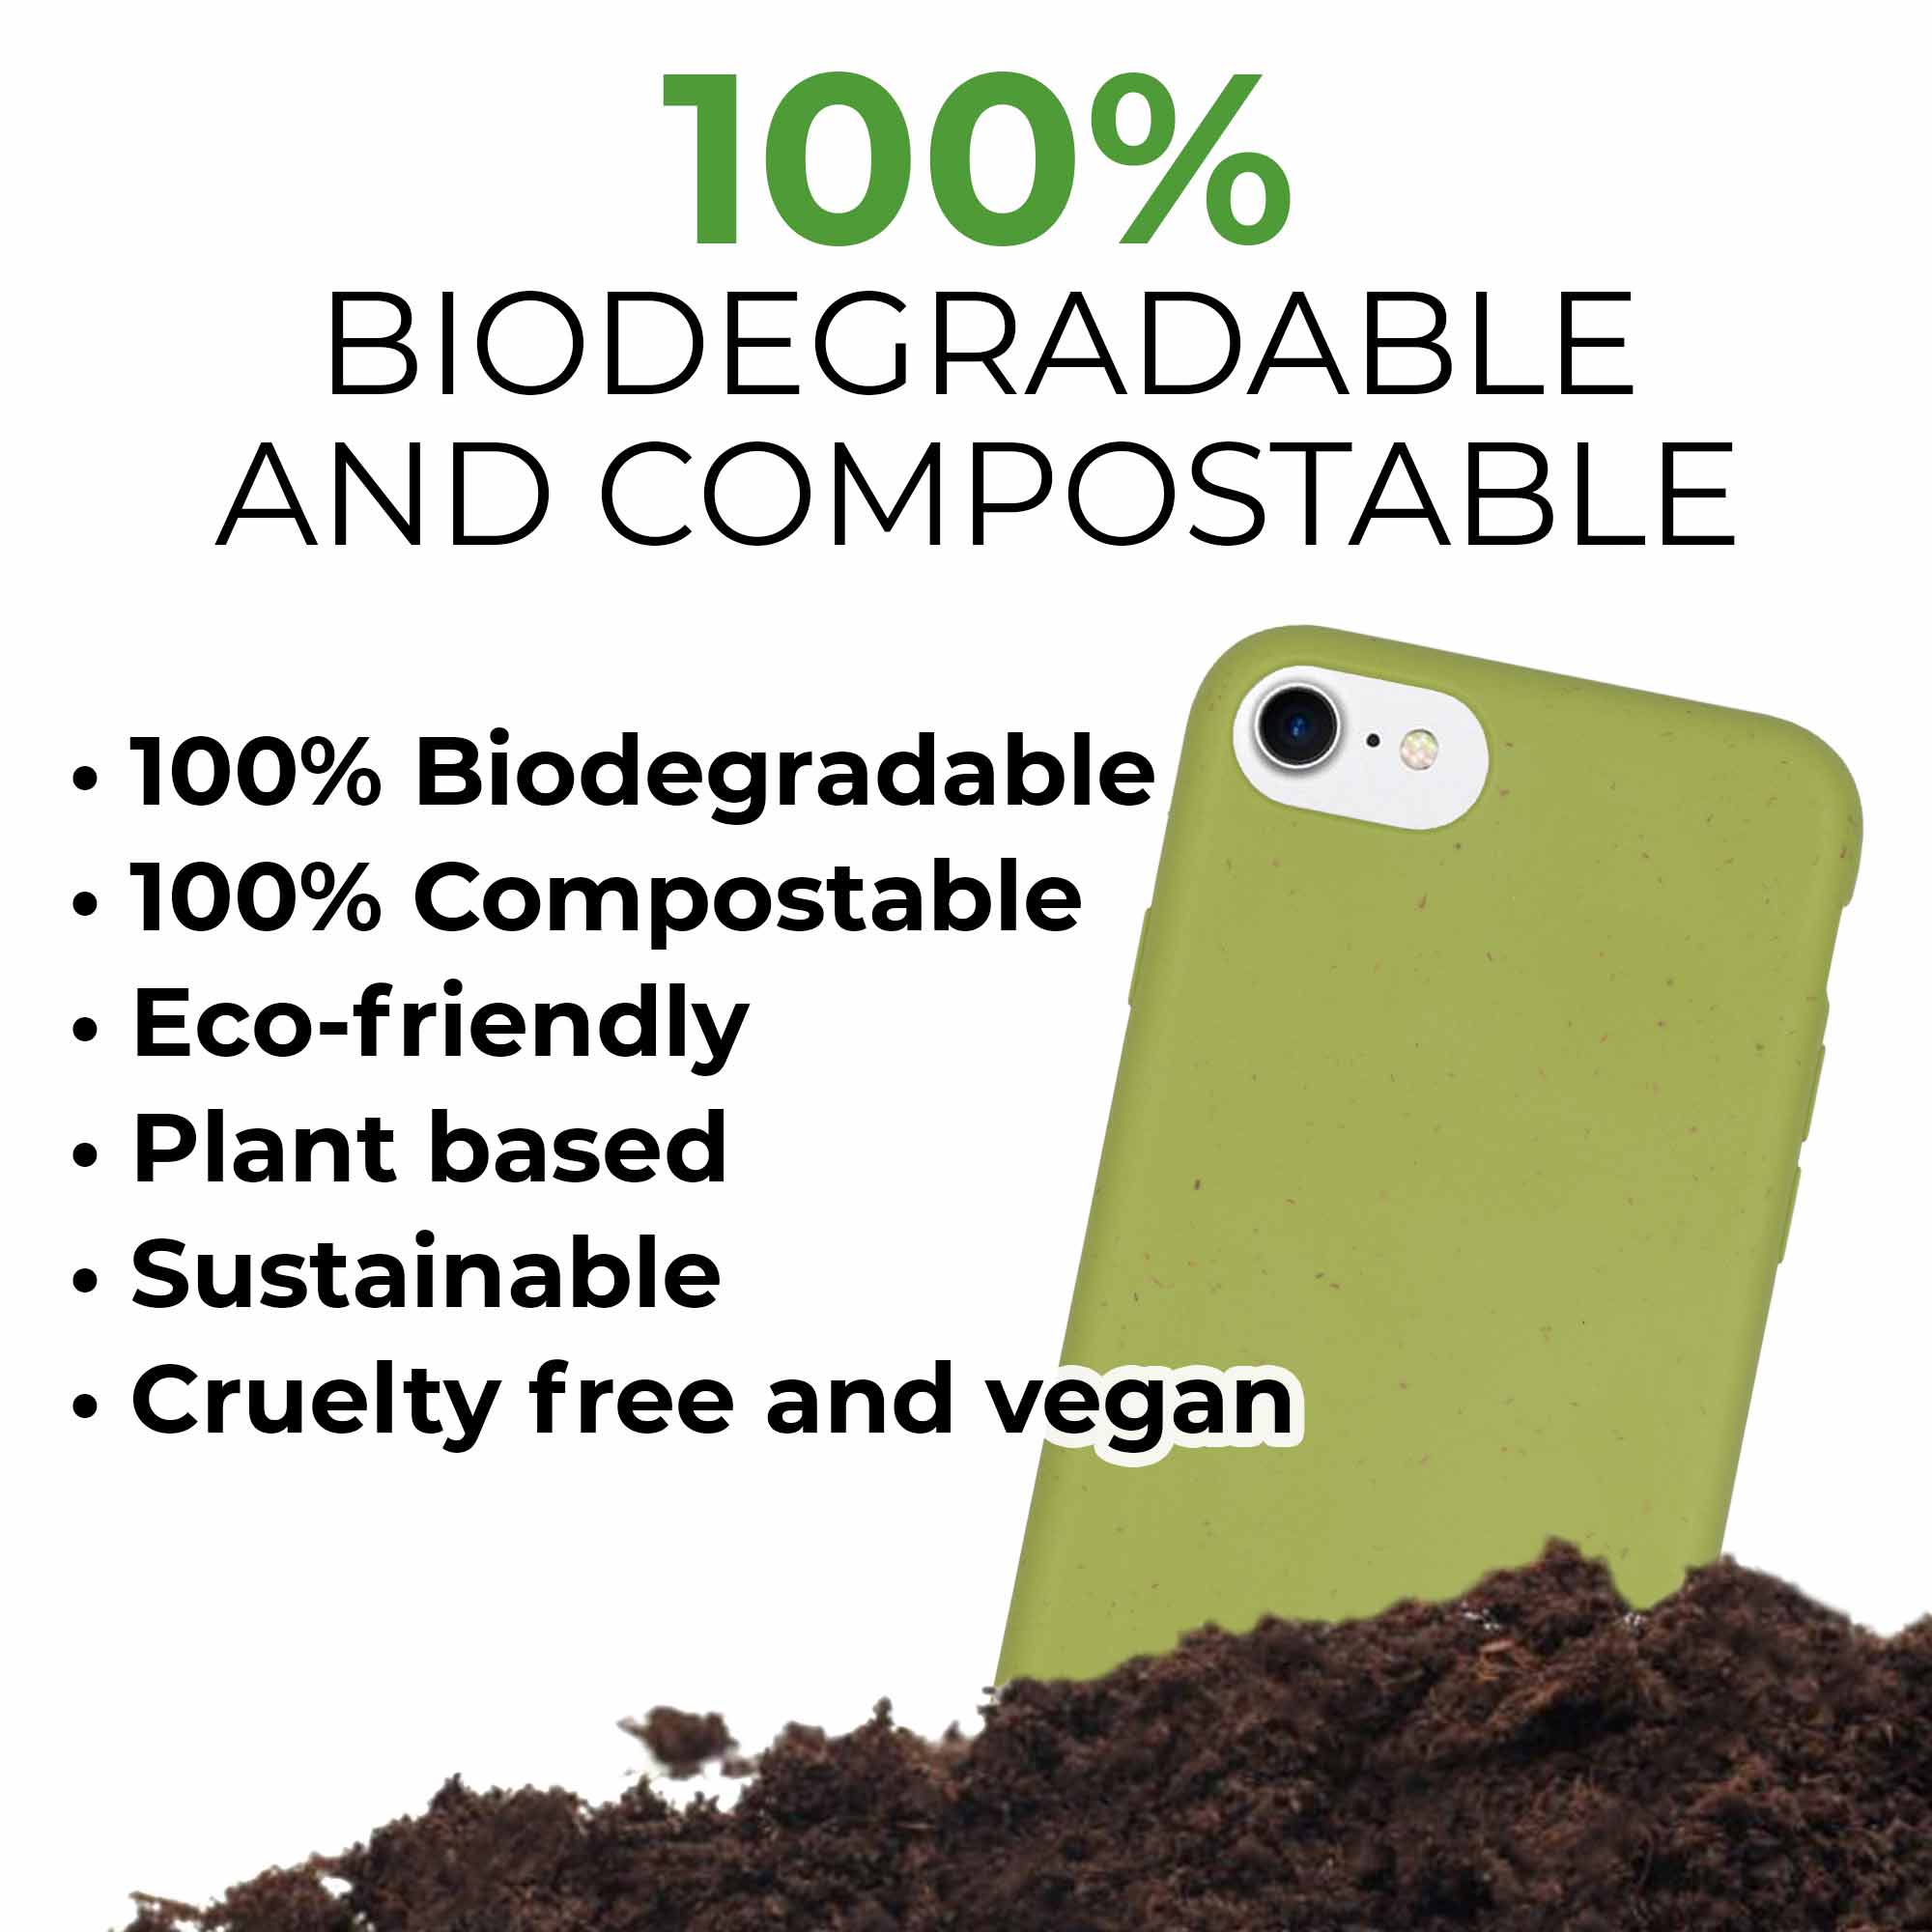 Material de la carcasa del iPhone totalmente biodegradable y compostable